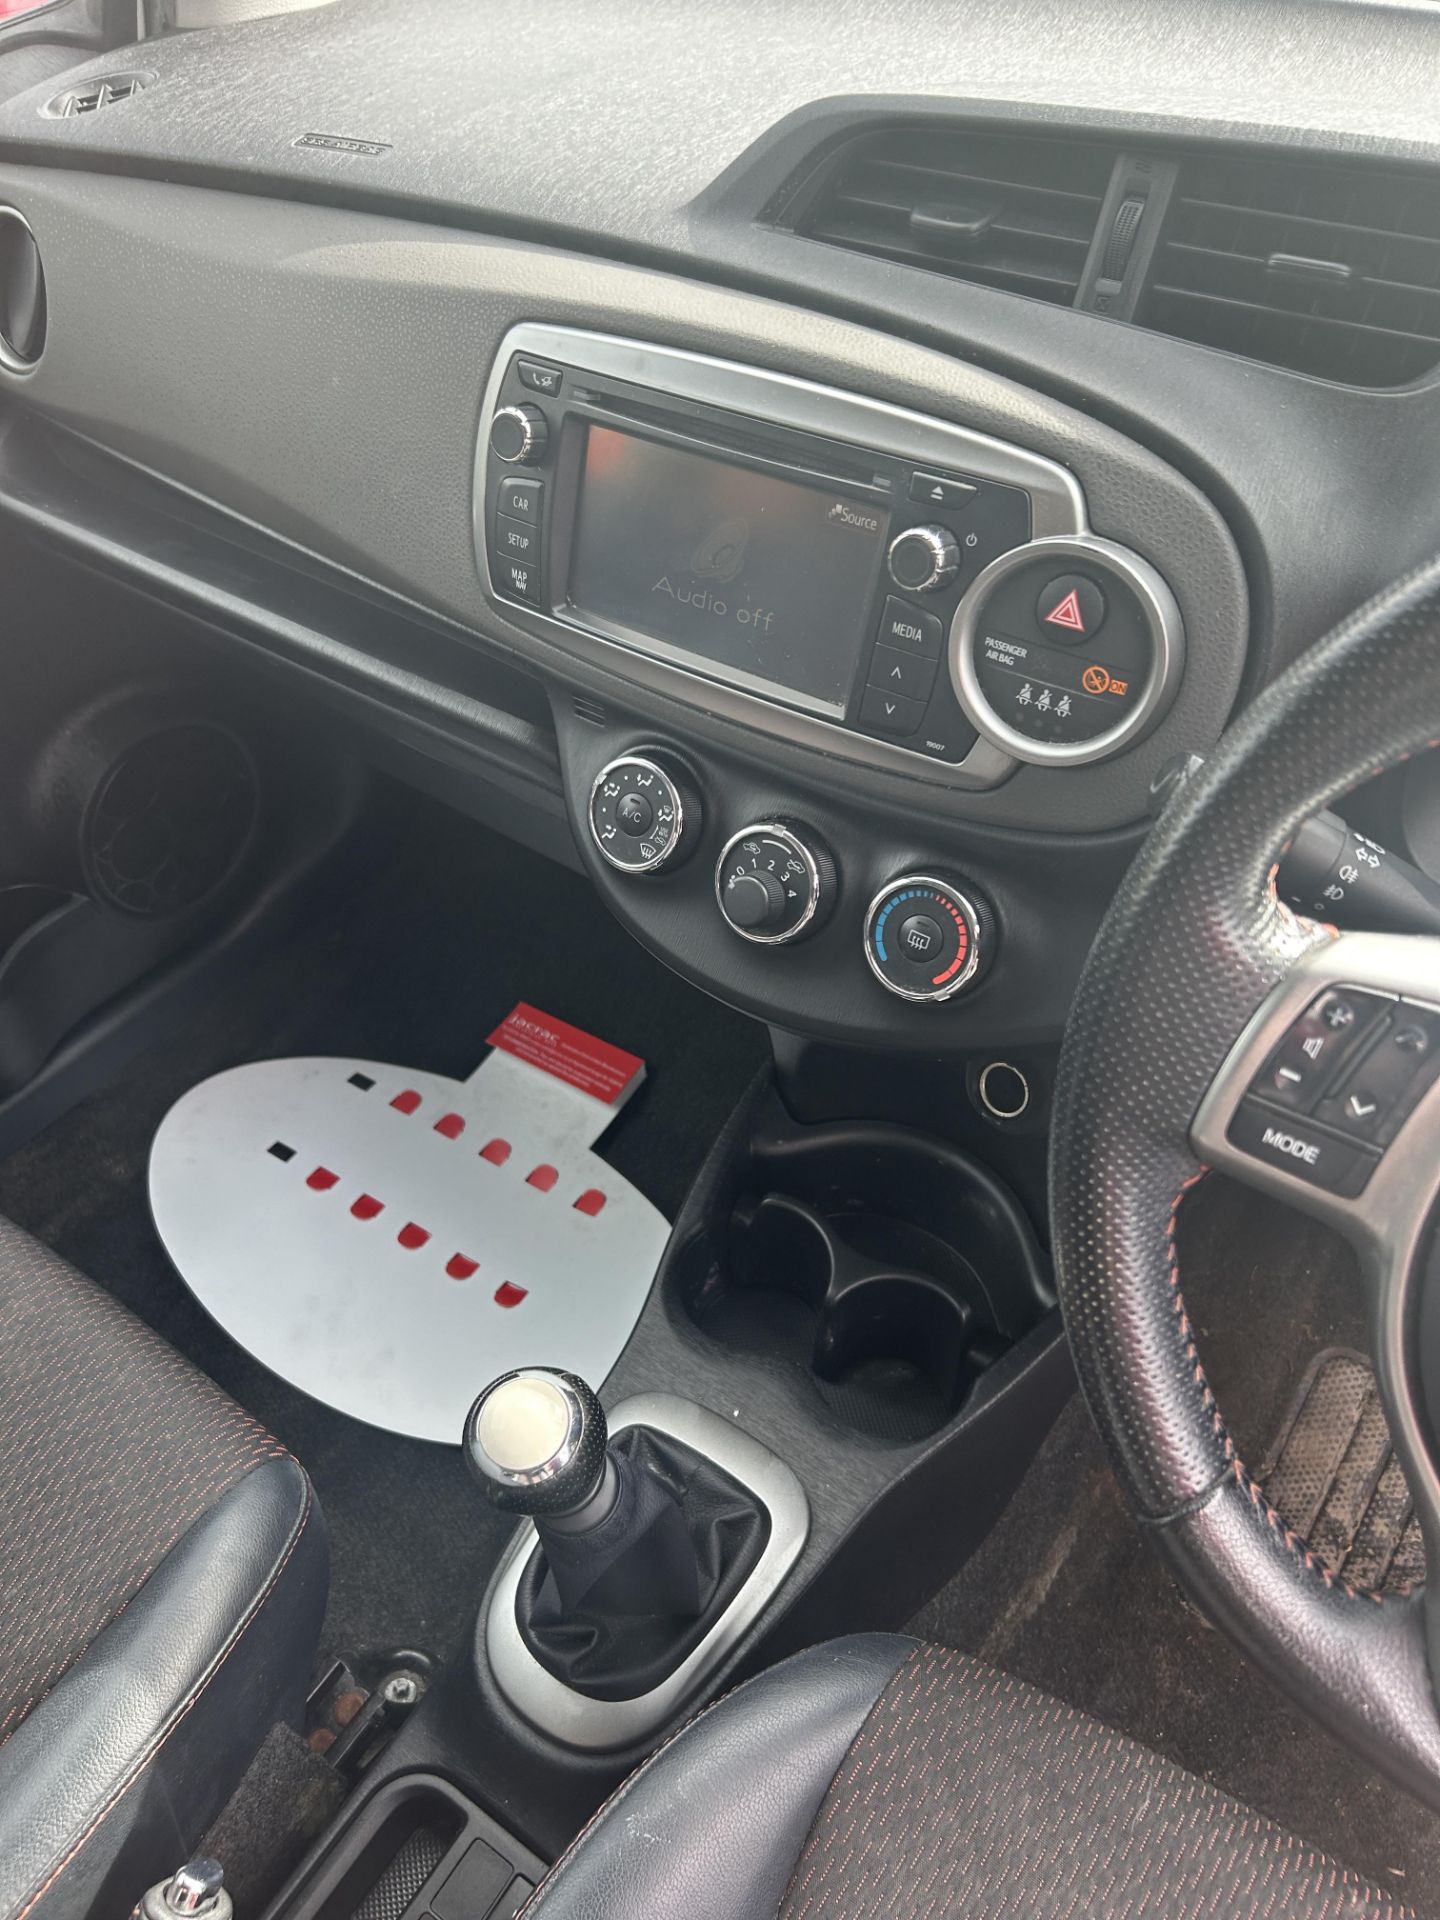 Toyota Yaris SR VVT-I Petrol 5 Door Hatchback | MV12 NNL | 113,044 Miles - Image 12 of 13